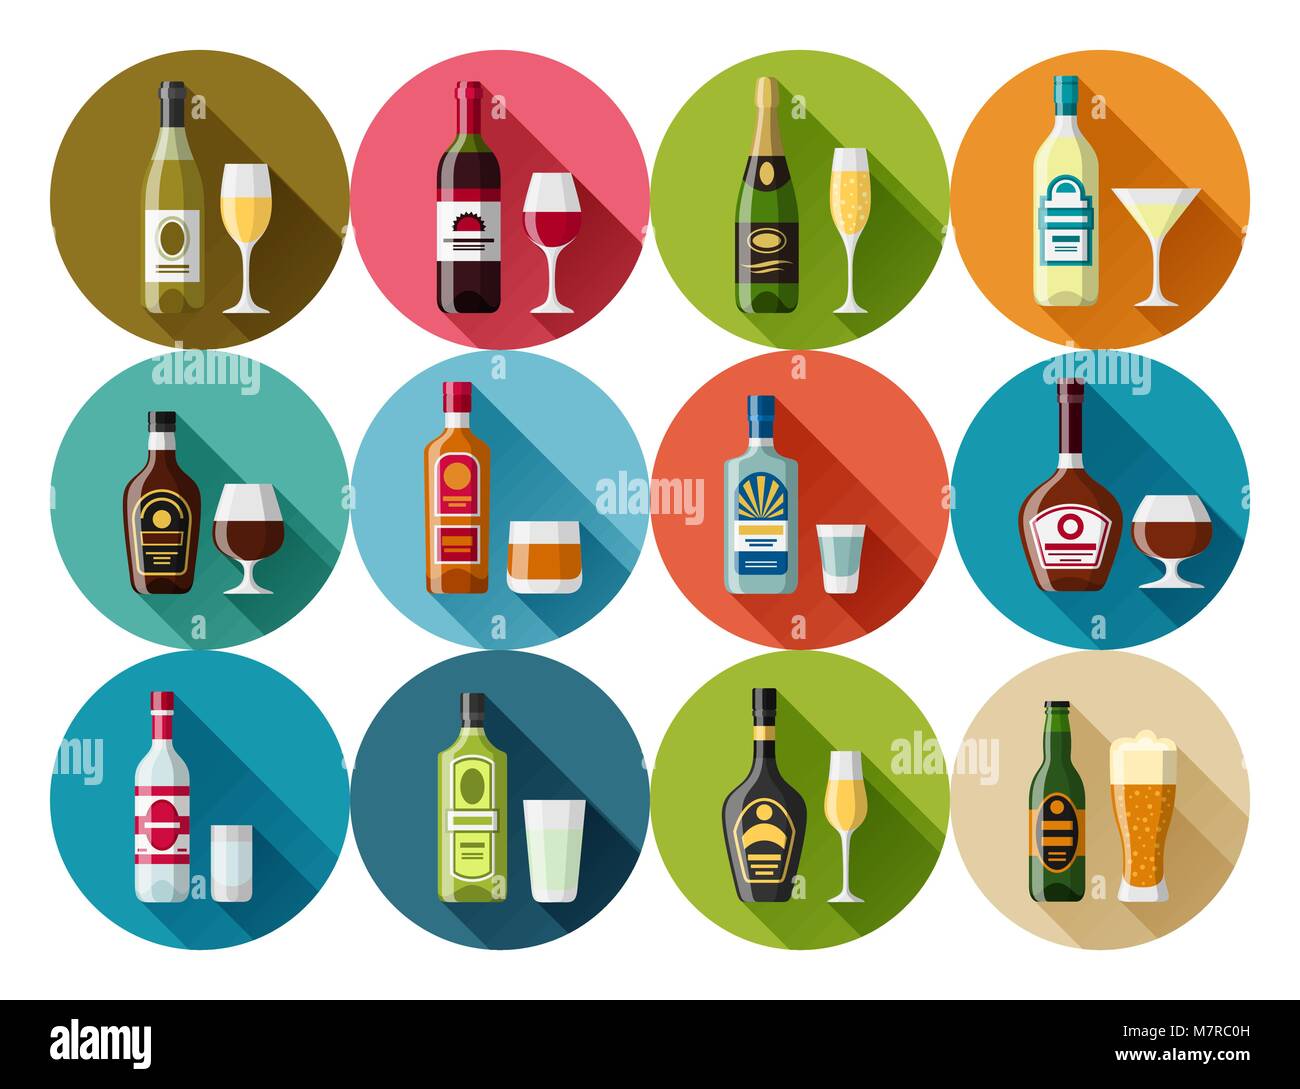 Alcohol drinks icon set. Bottles, glasses for restaurants and bars Stock Vector